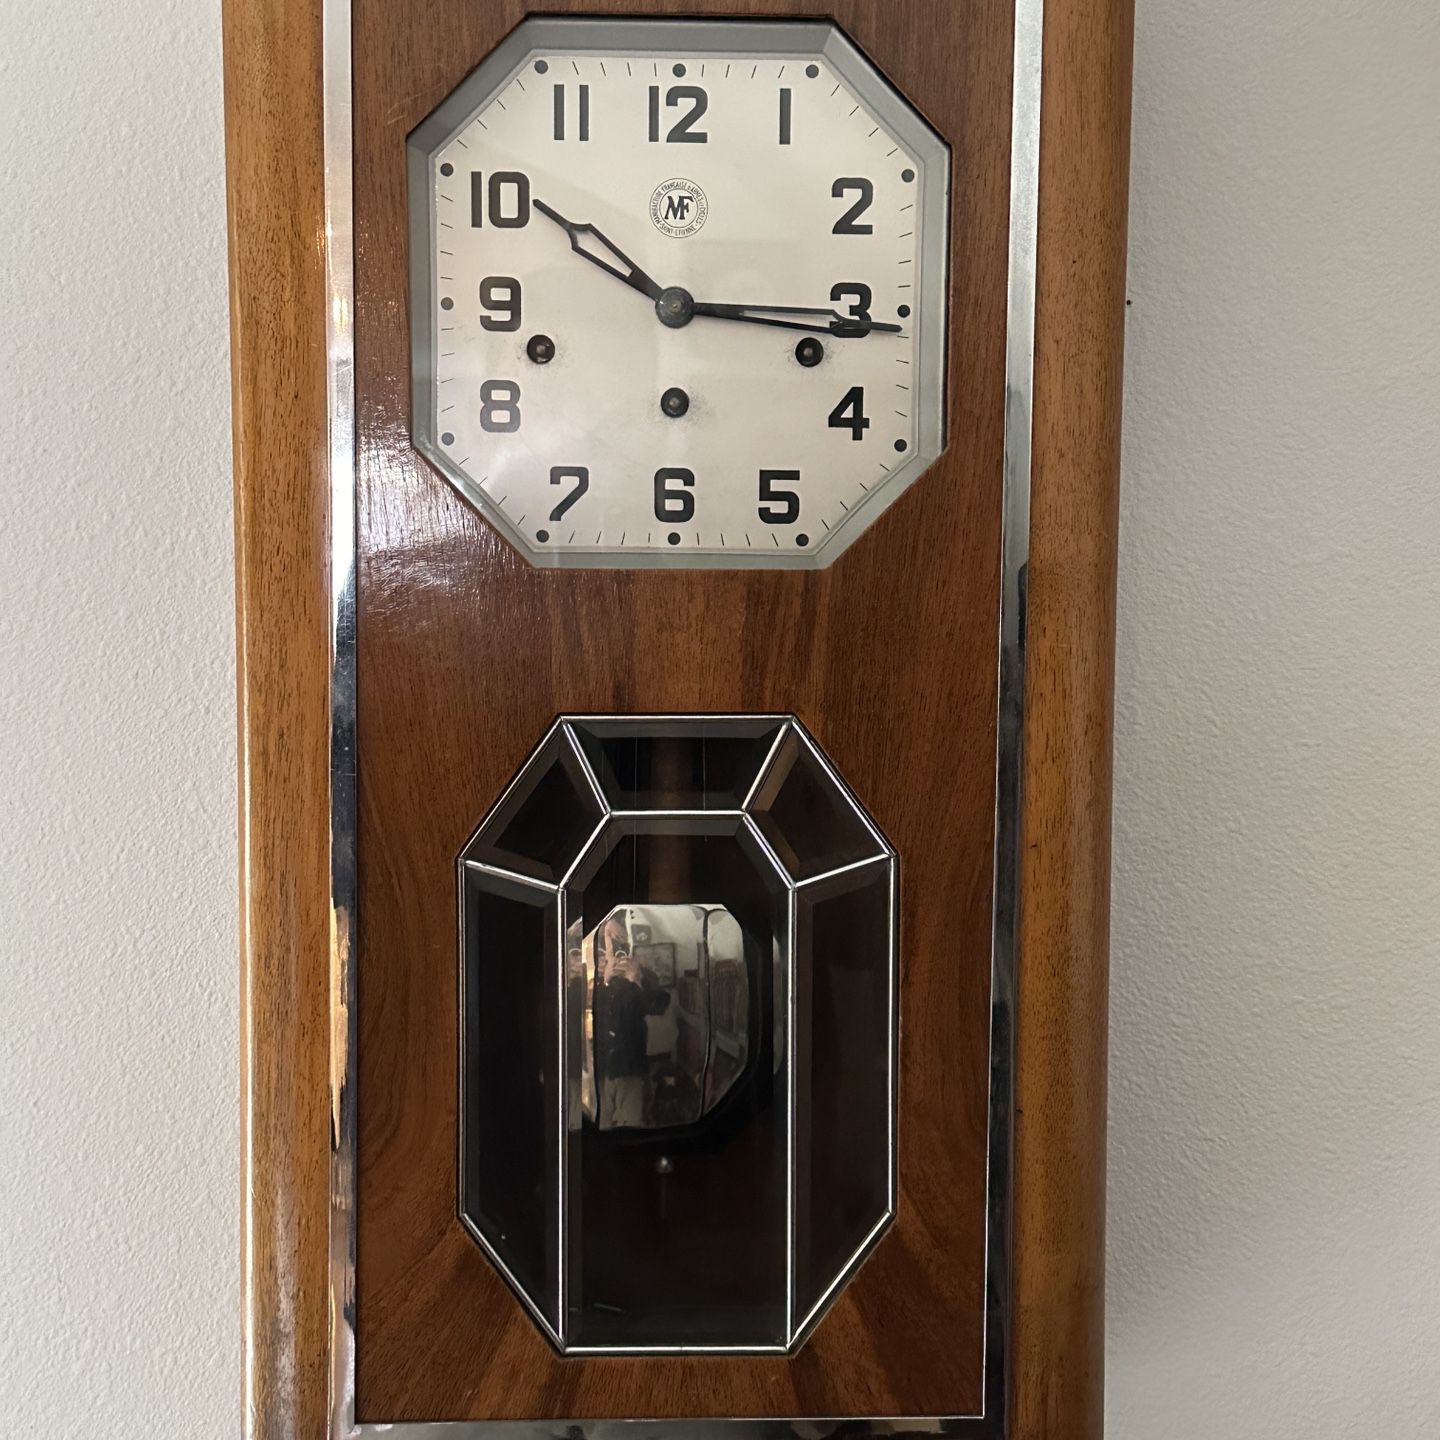 Rare 1936 French Art Deco Wall Clock w/ Chimes of Reynaldo Hahn